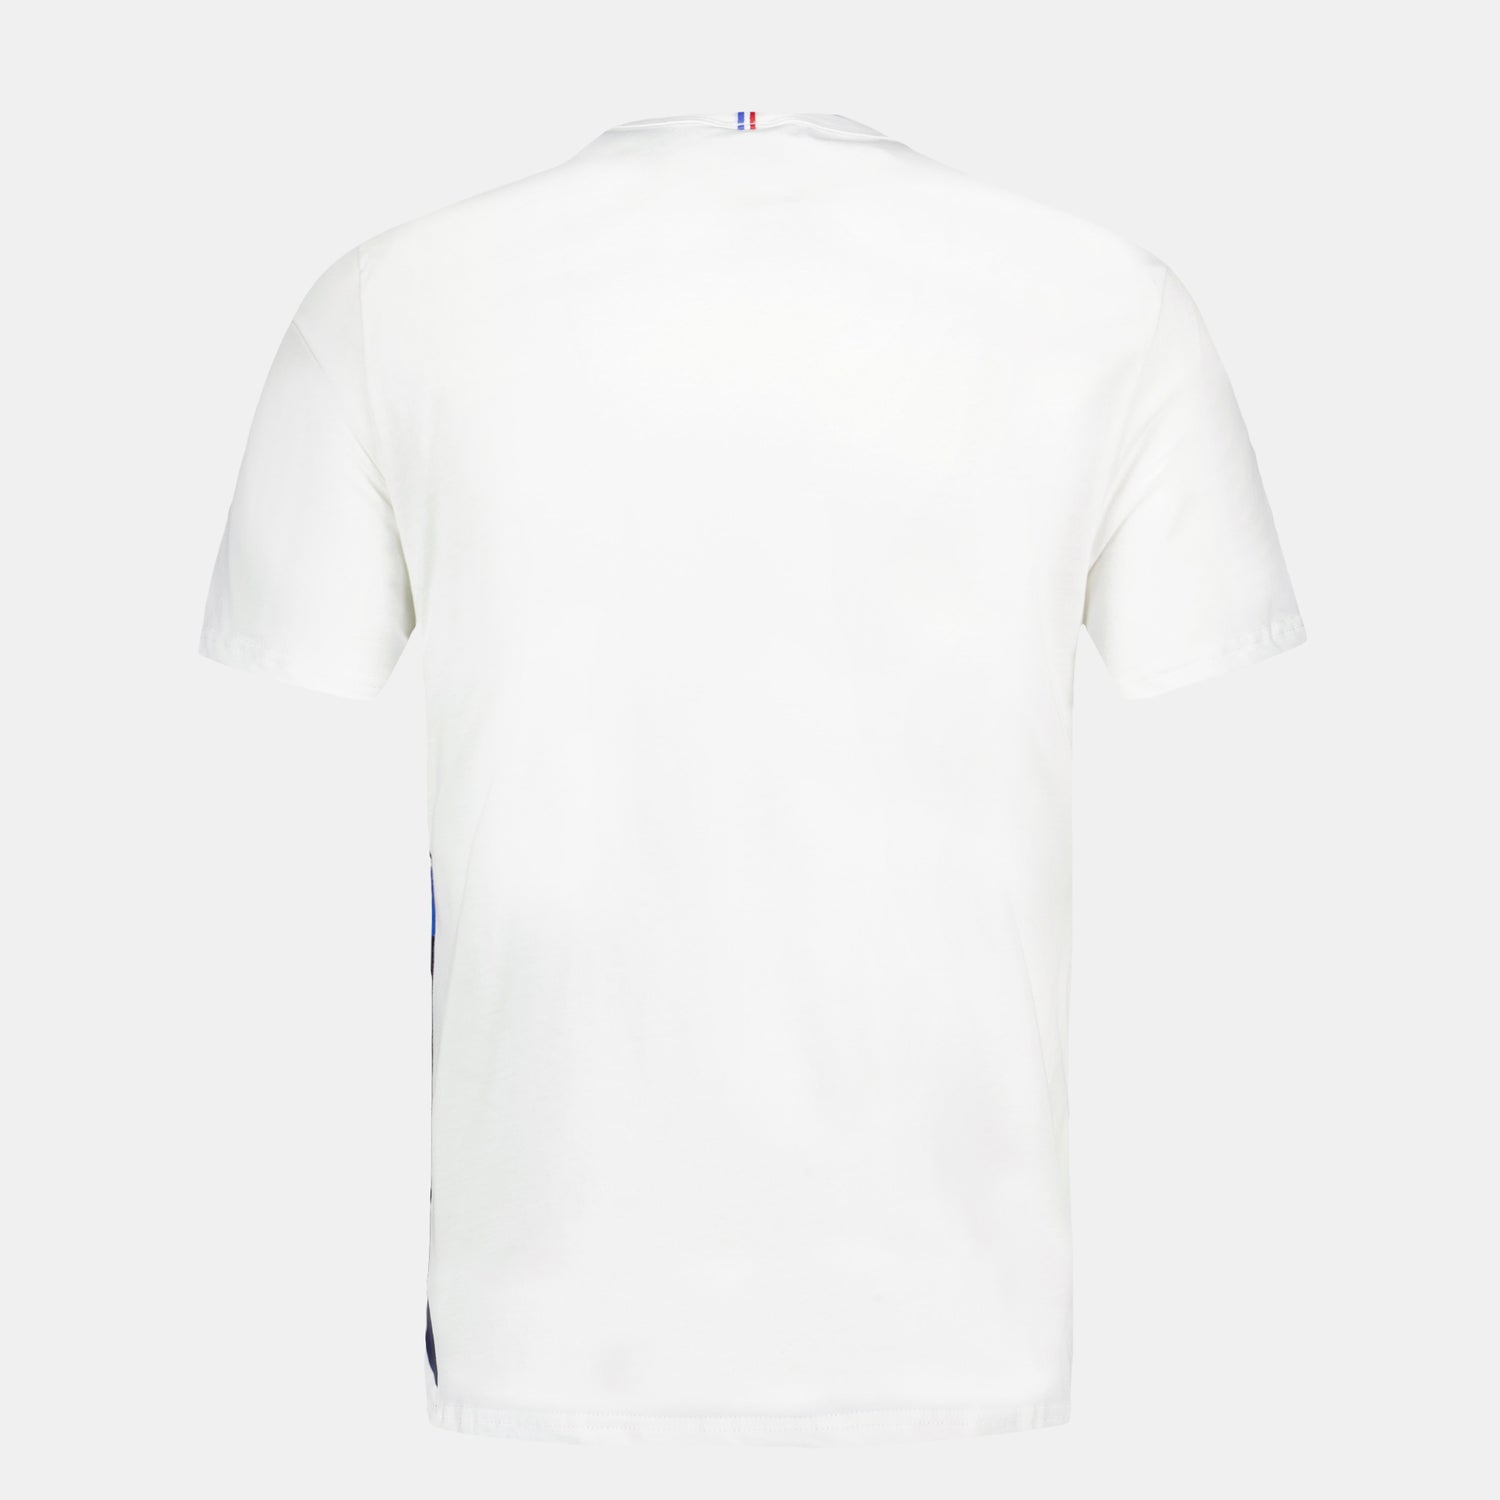 2410212-SAISON 1 Tee SS N°1 M new optical white | T-shirt Unisexe